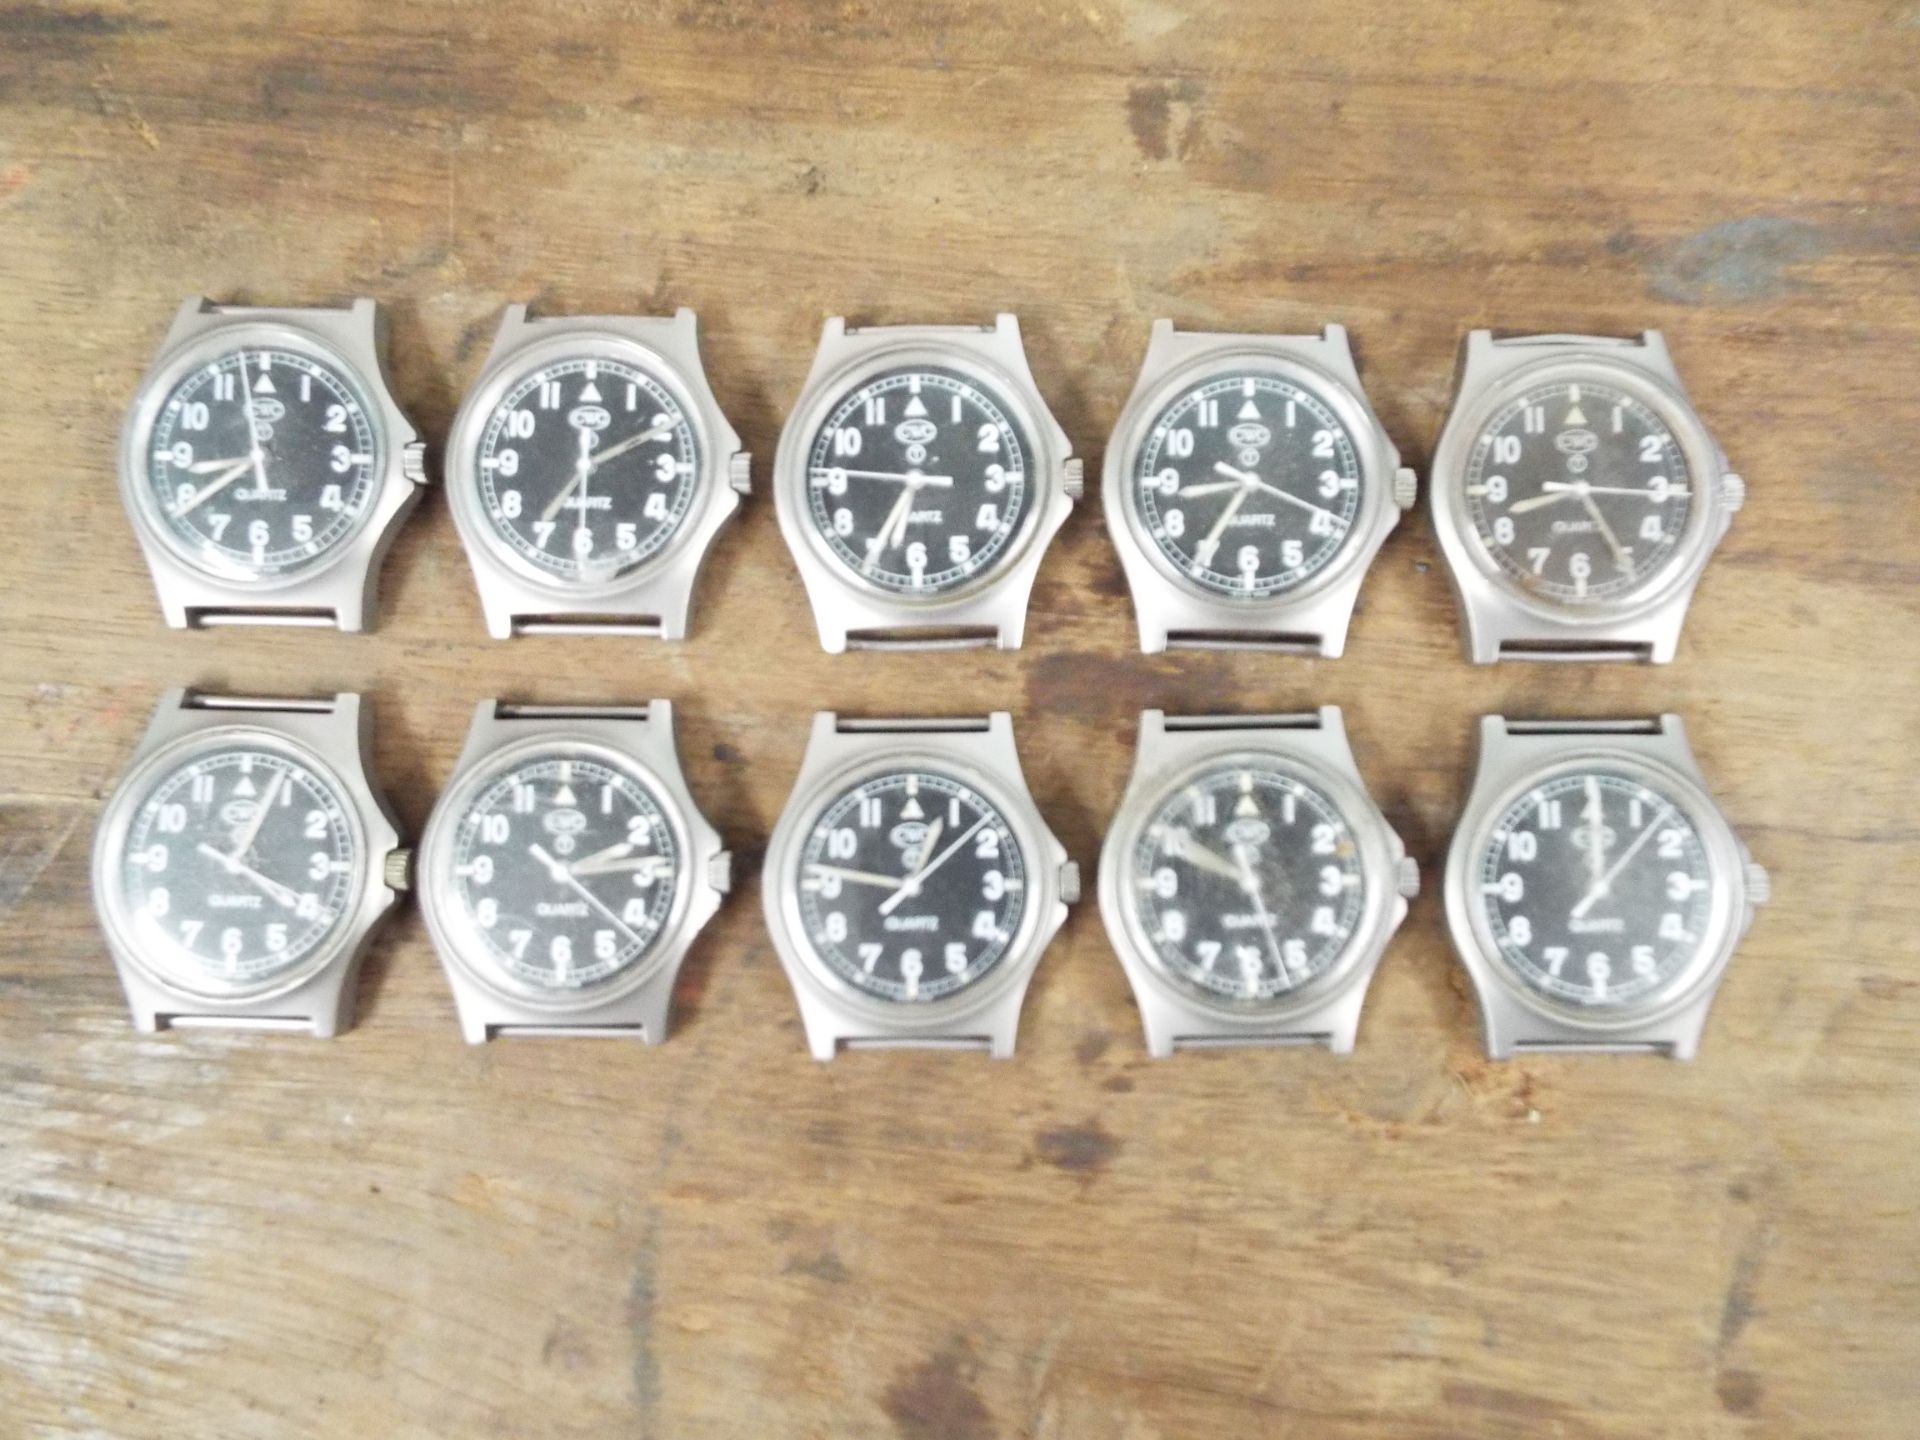 10 x Genuine British Army CWC Quartz Wrist Watches